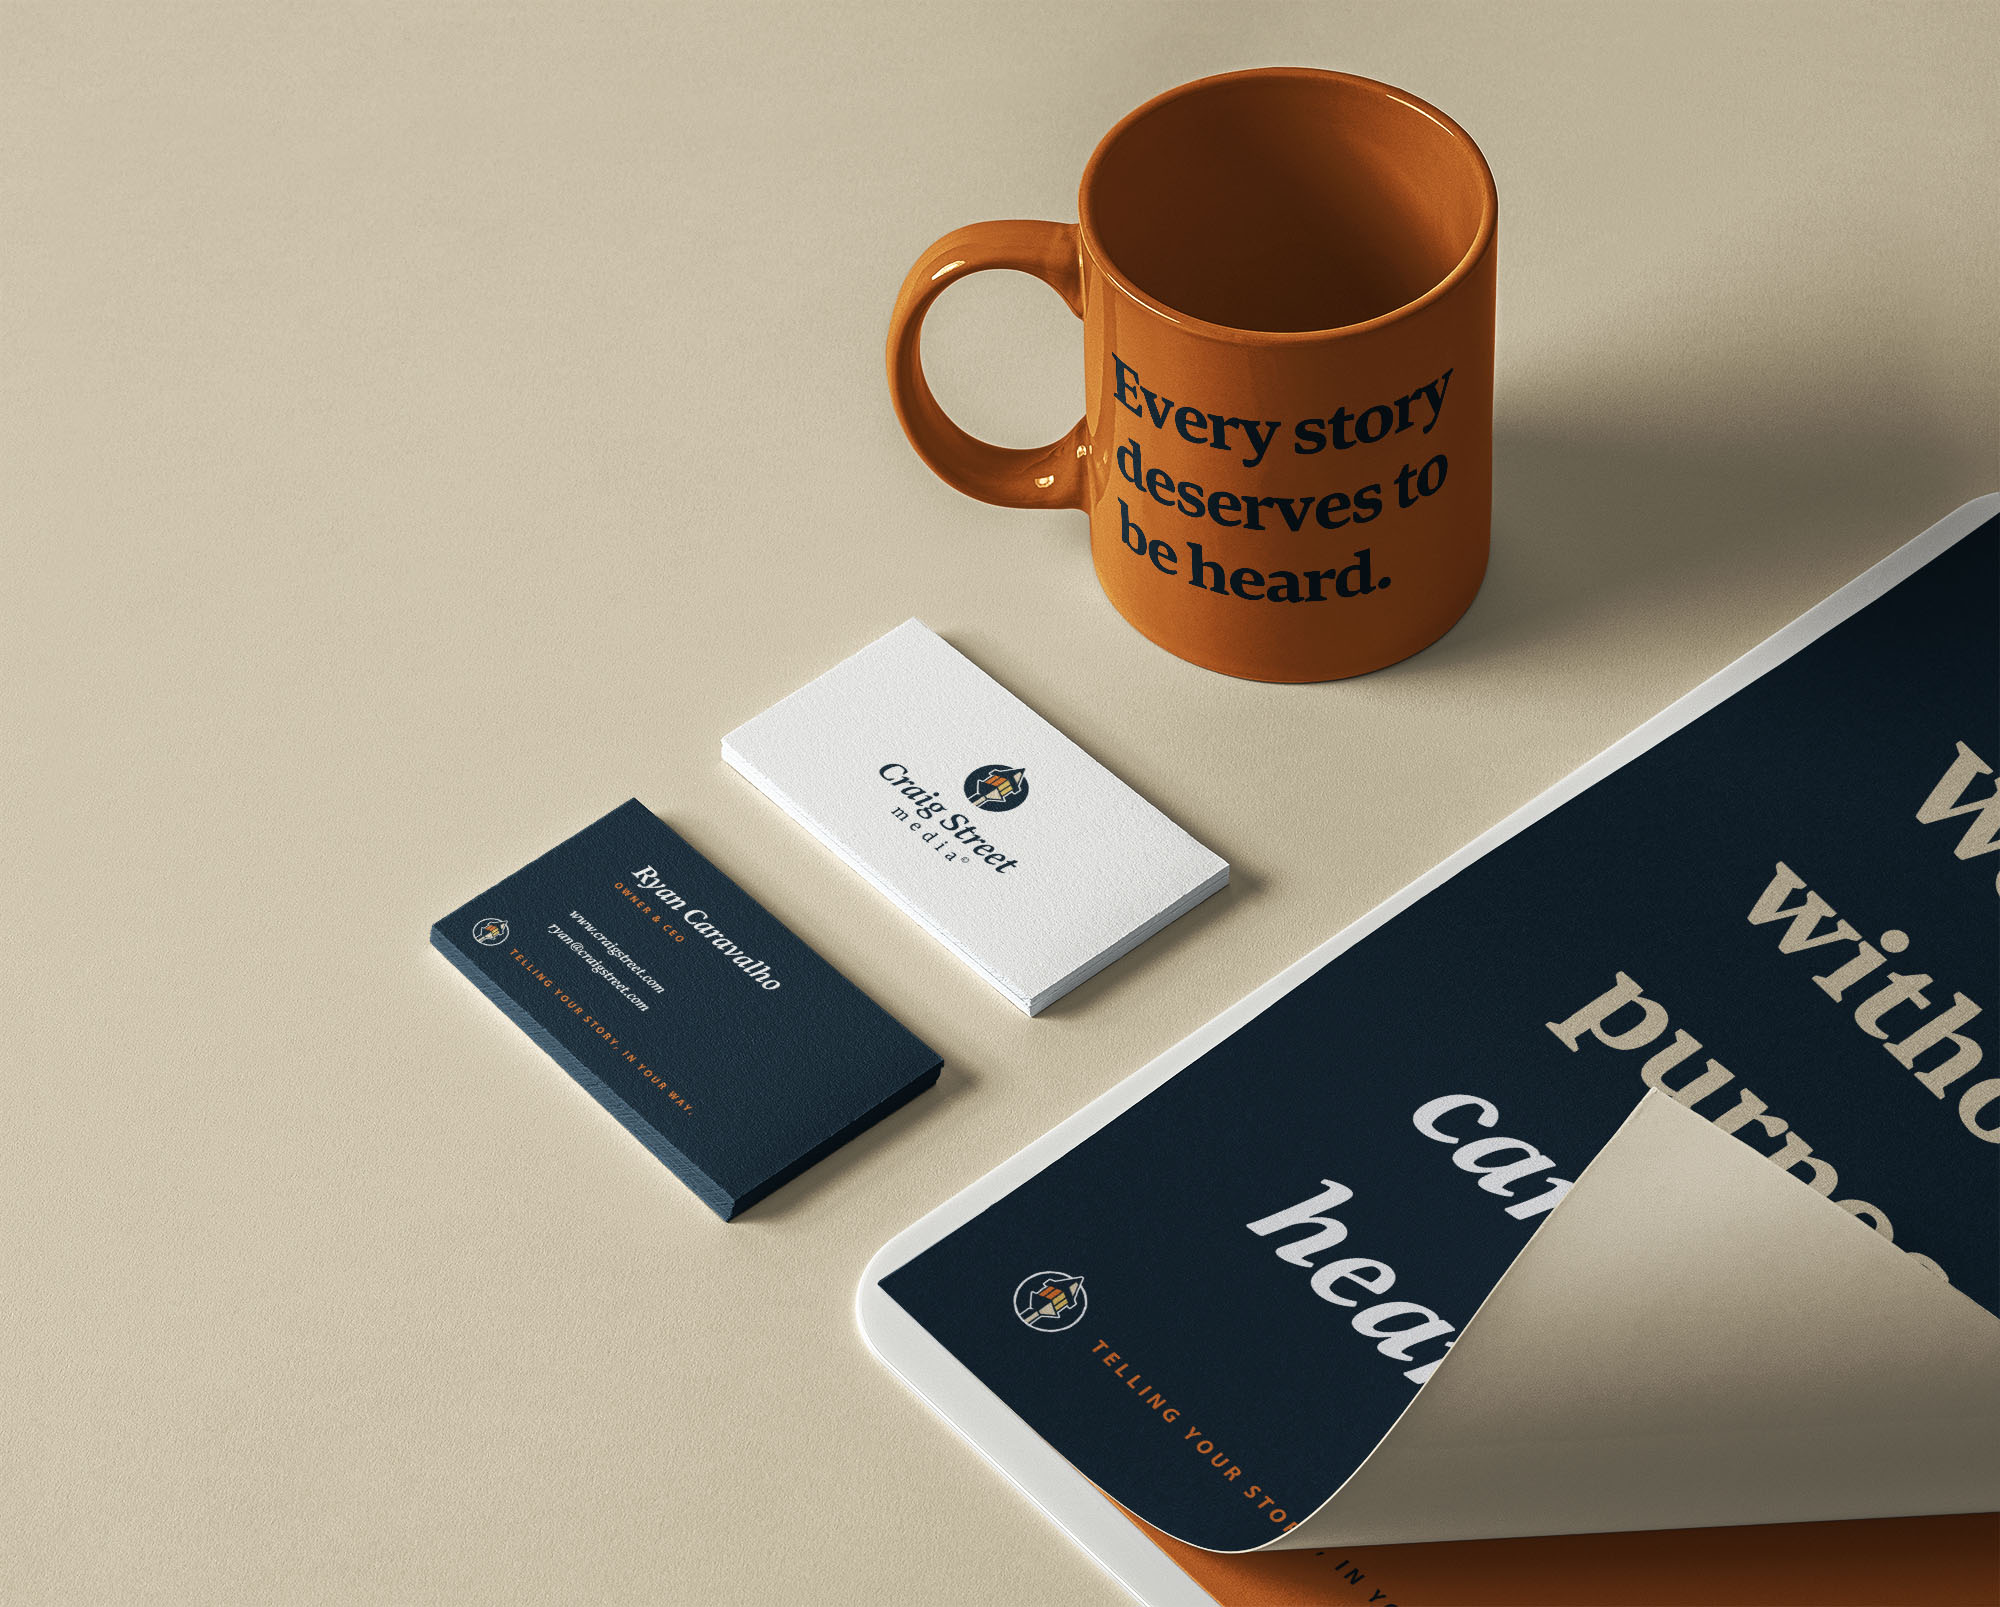 A branded coffee mug, business cards, and folder for Craig Street Media